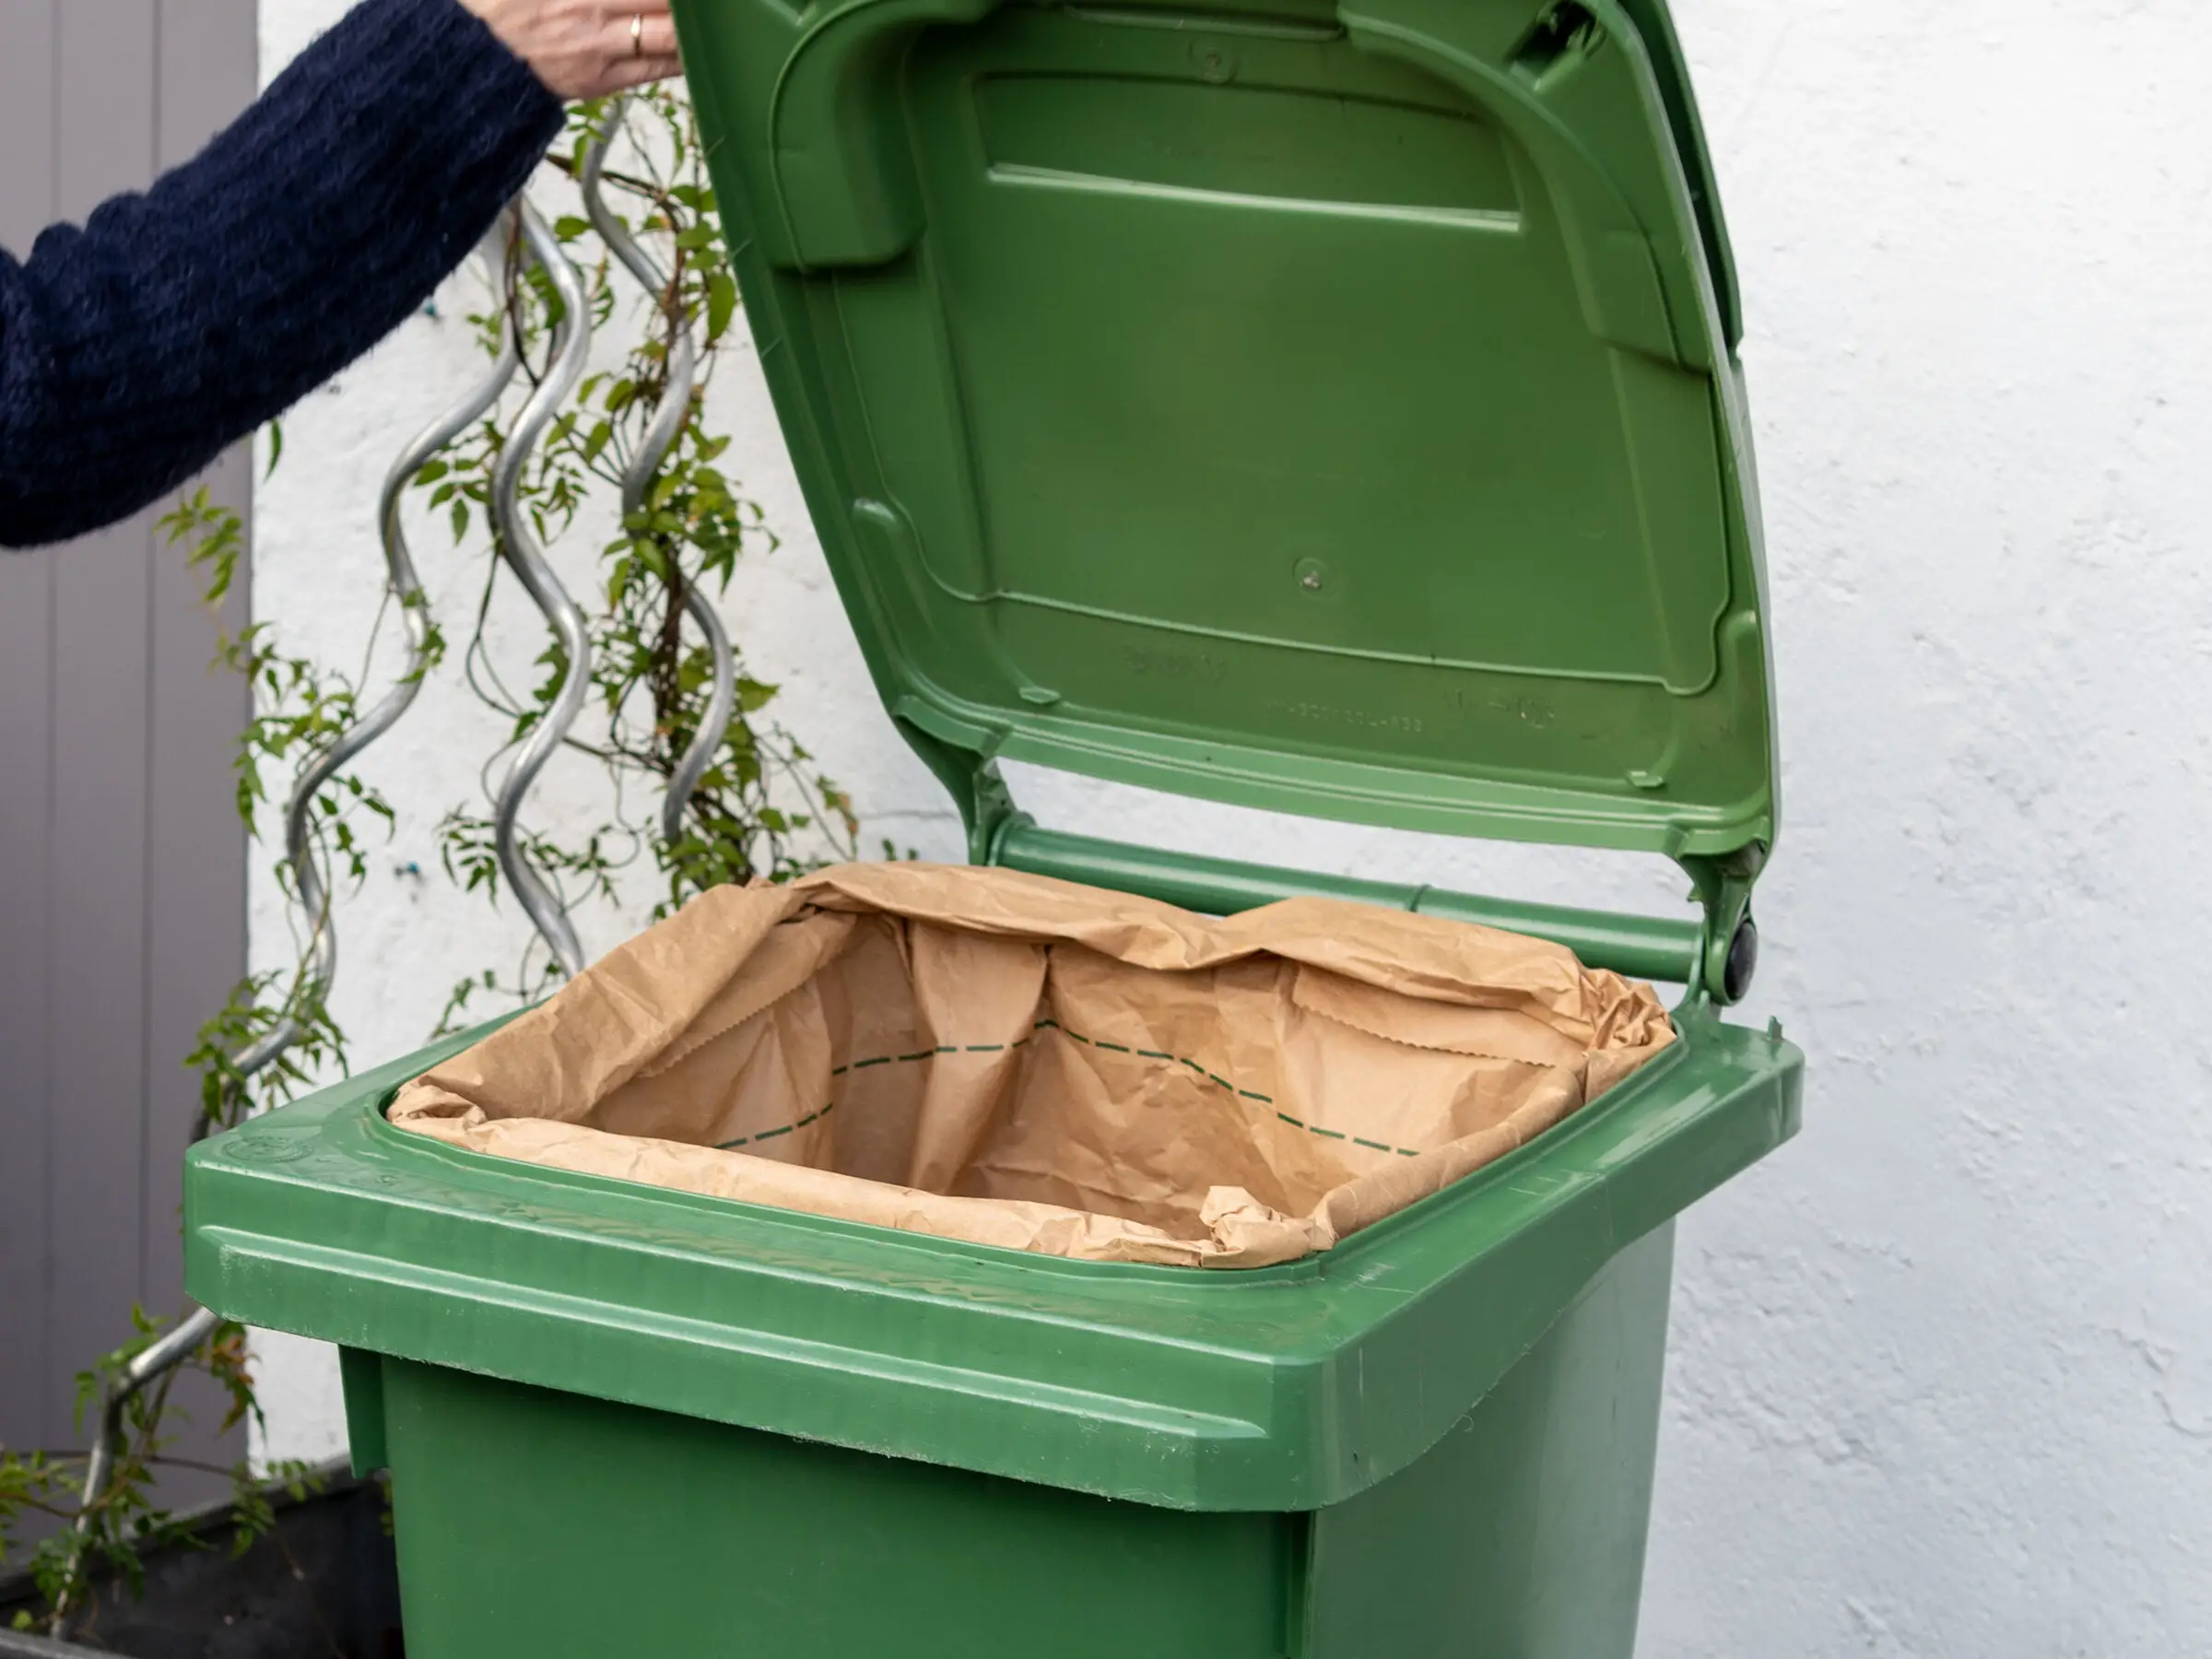 https://www.greenerlyfe.com/wp-content/uploads/2022/04/compostable-bags-for-the-green-bin-e1649258448427.jpg